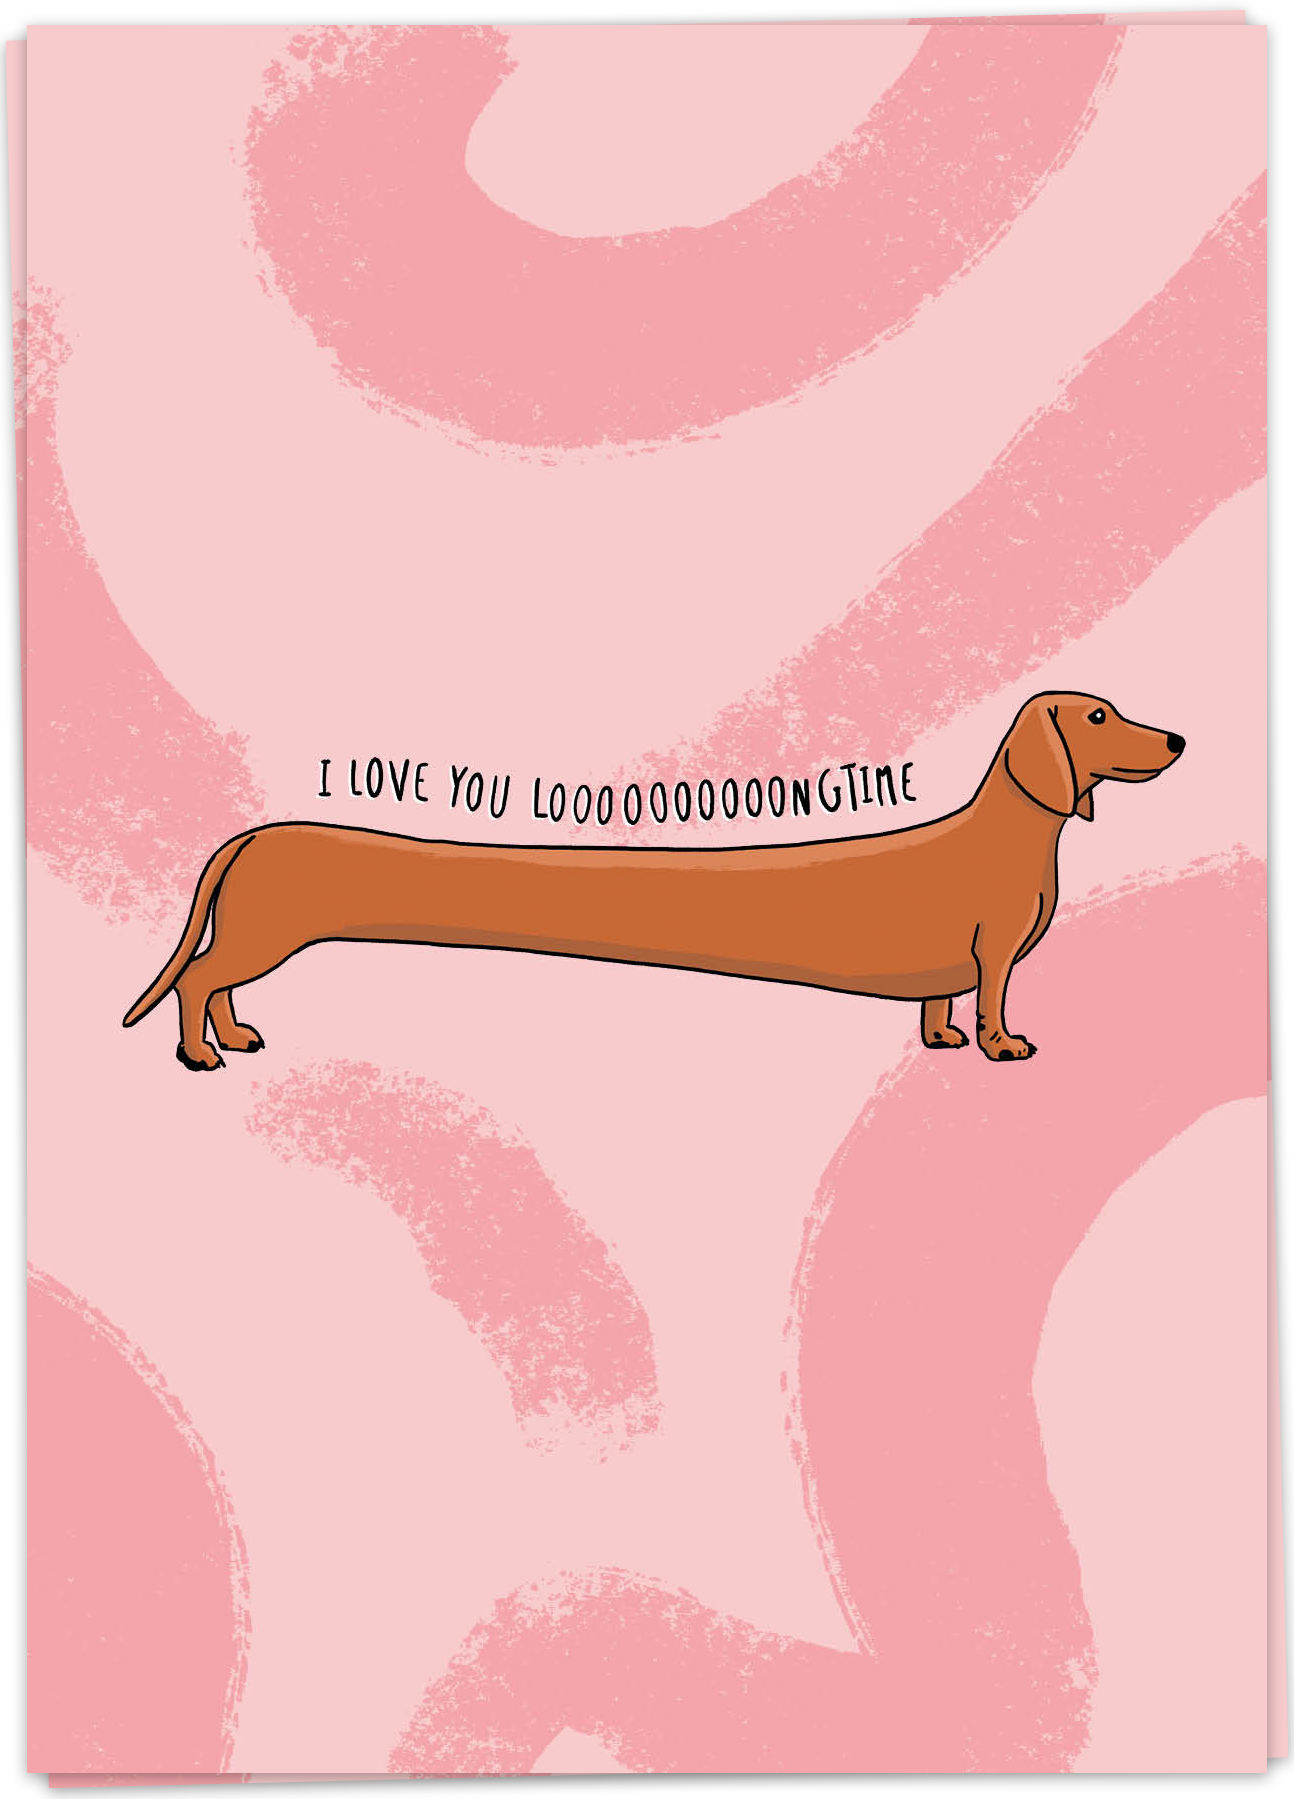 Wiener love